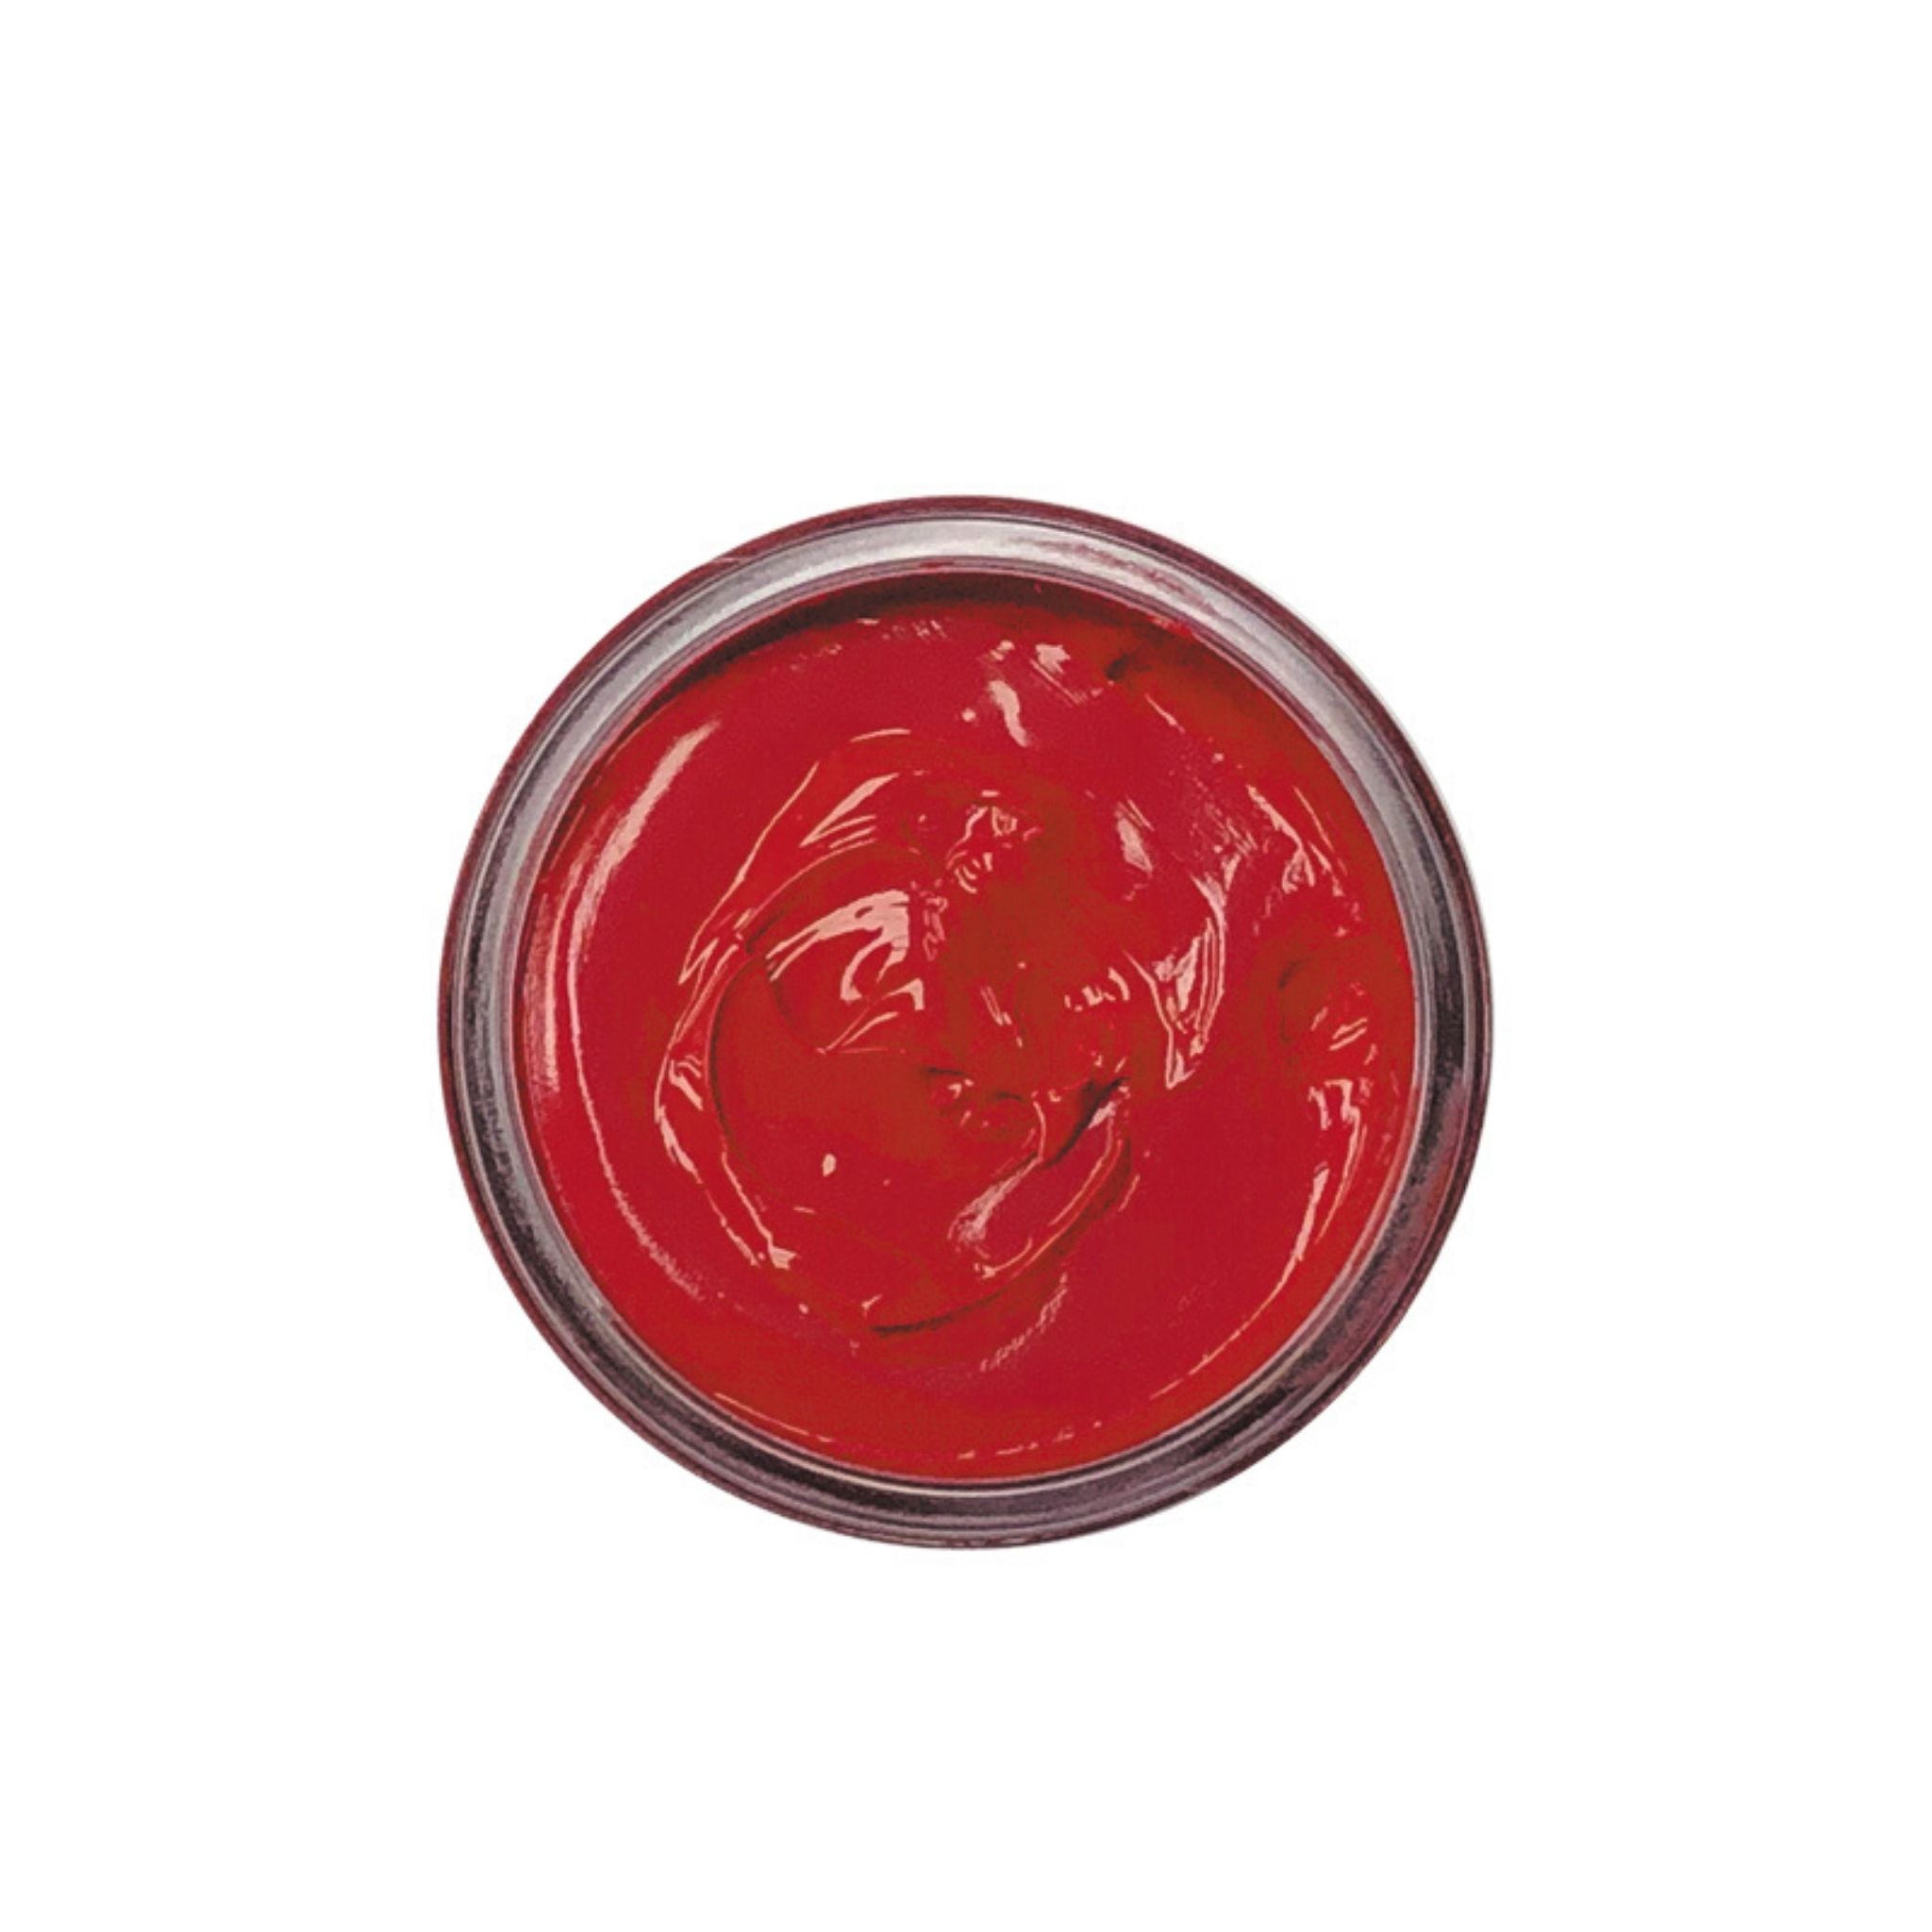 Red shoe cream polish in clear jar